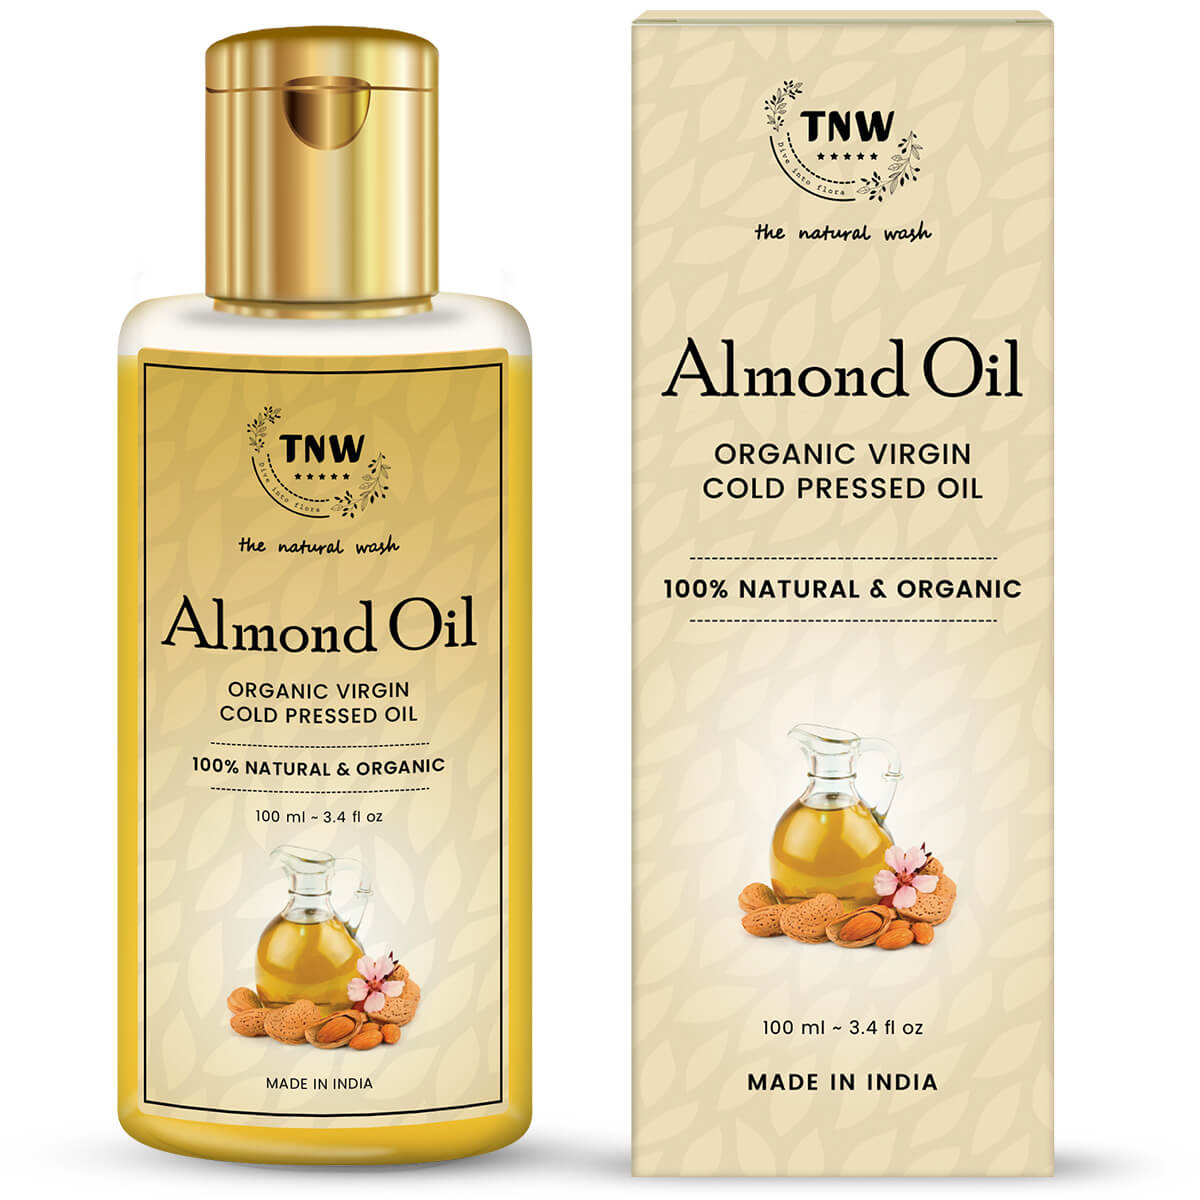 Virgin Almond Oil - Cold Pressed Oil For Skin & Hair